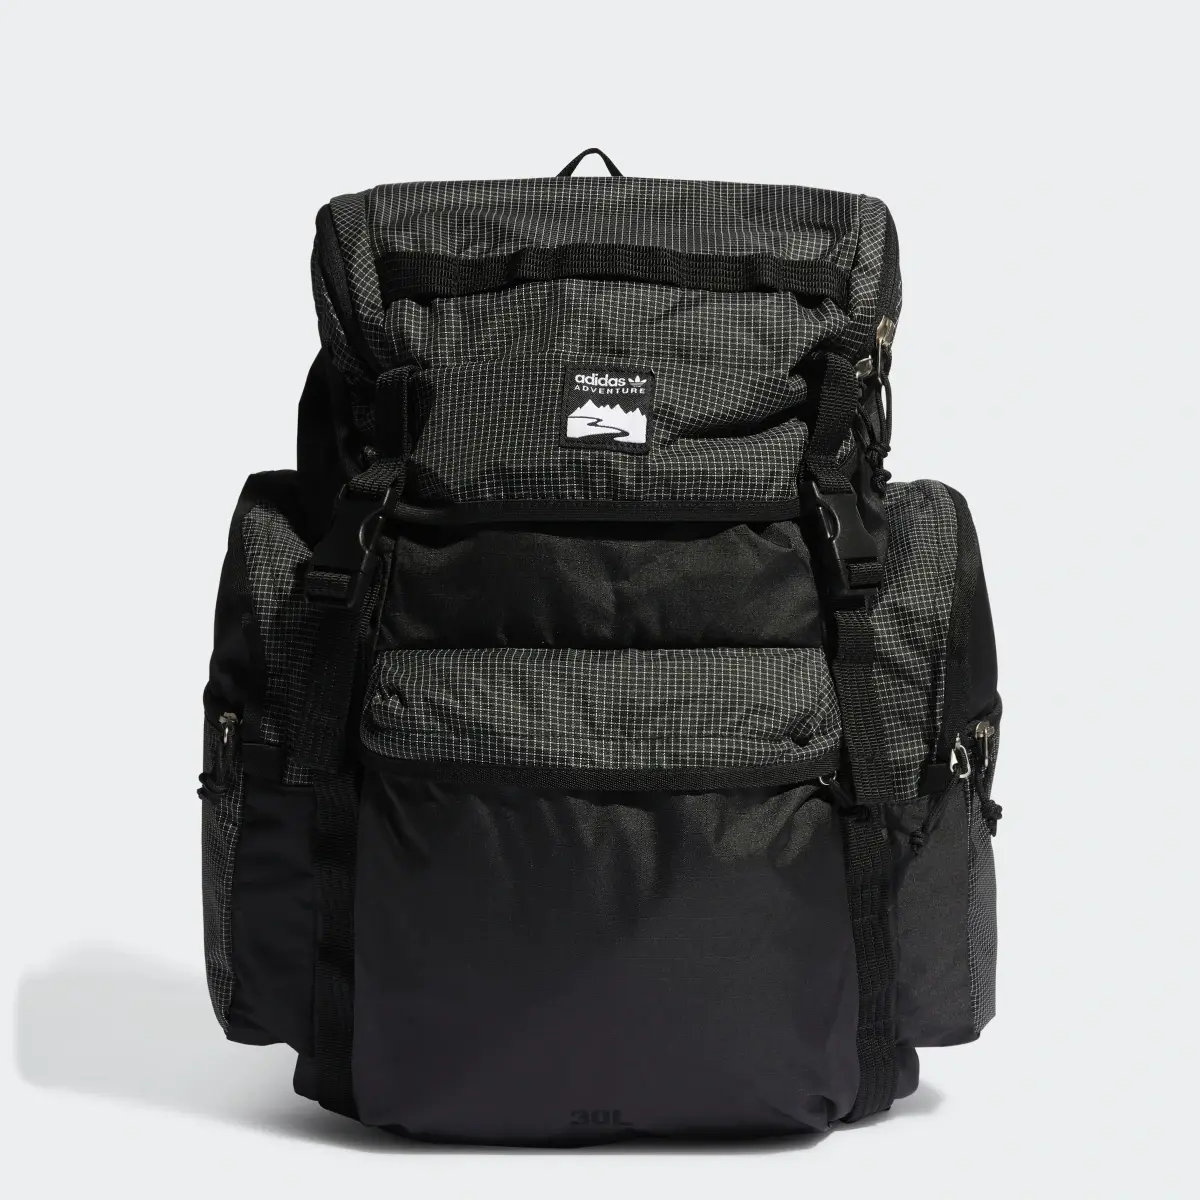 Adidas Adventure Toploader Backpack. 1